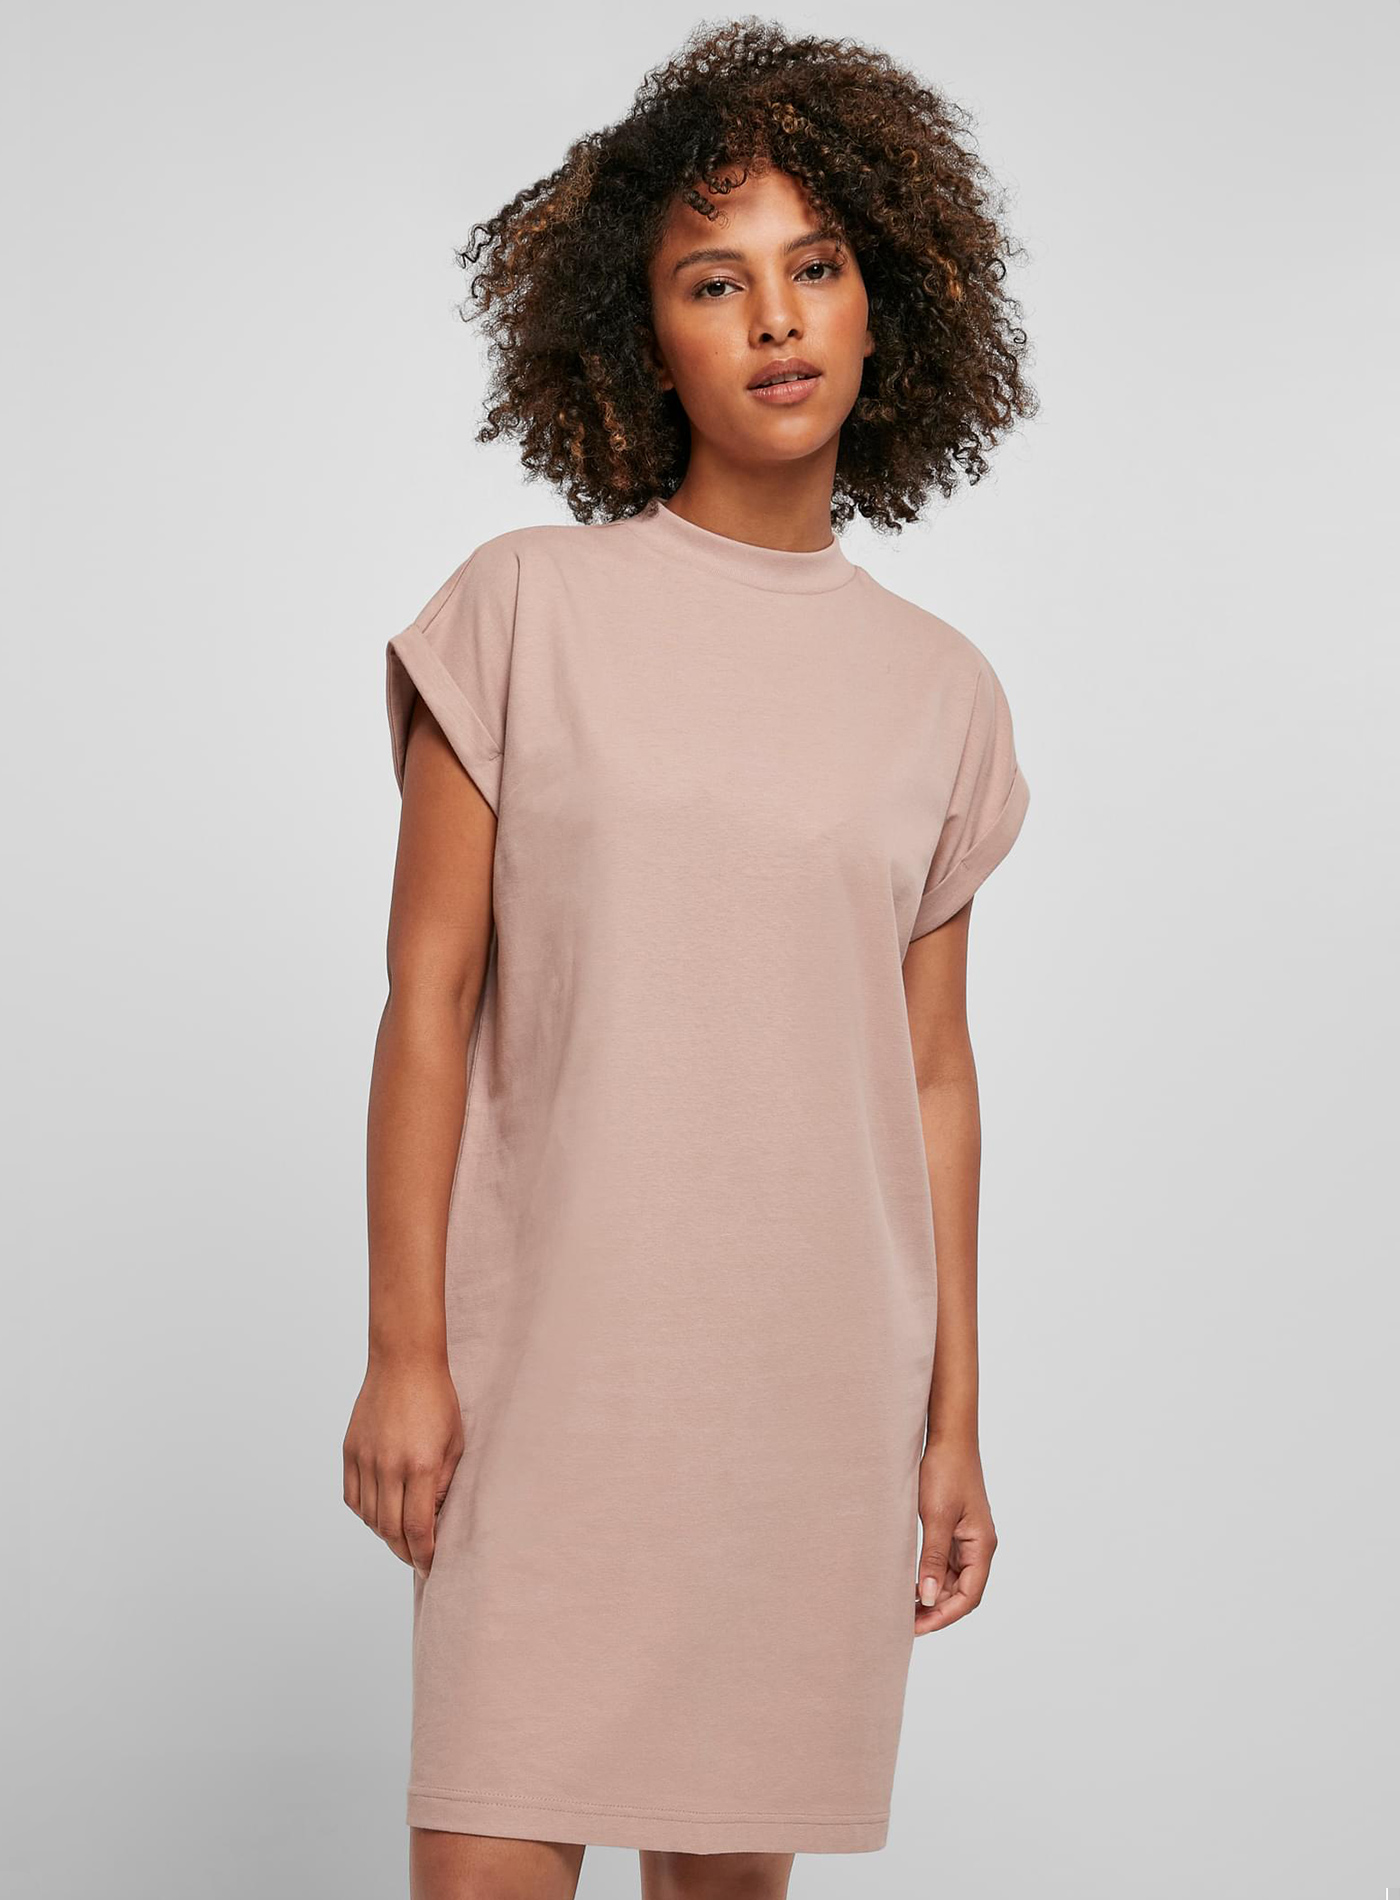 Dámské šaty Builted - Růžový soumrak XL